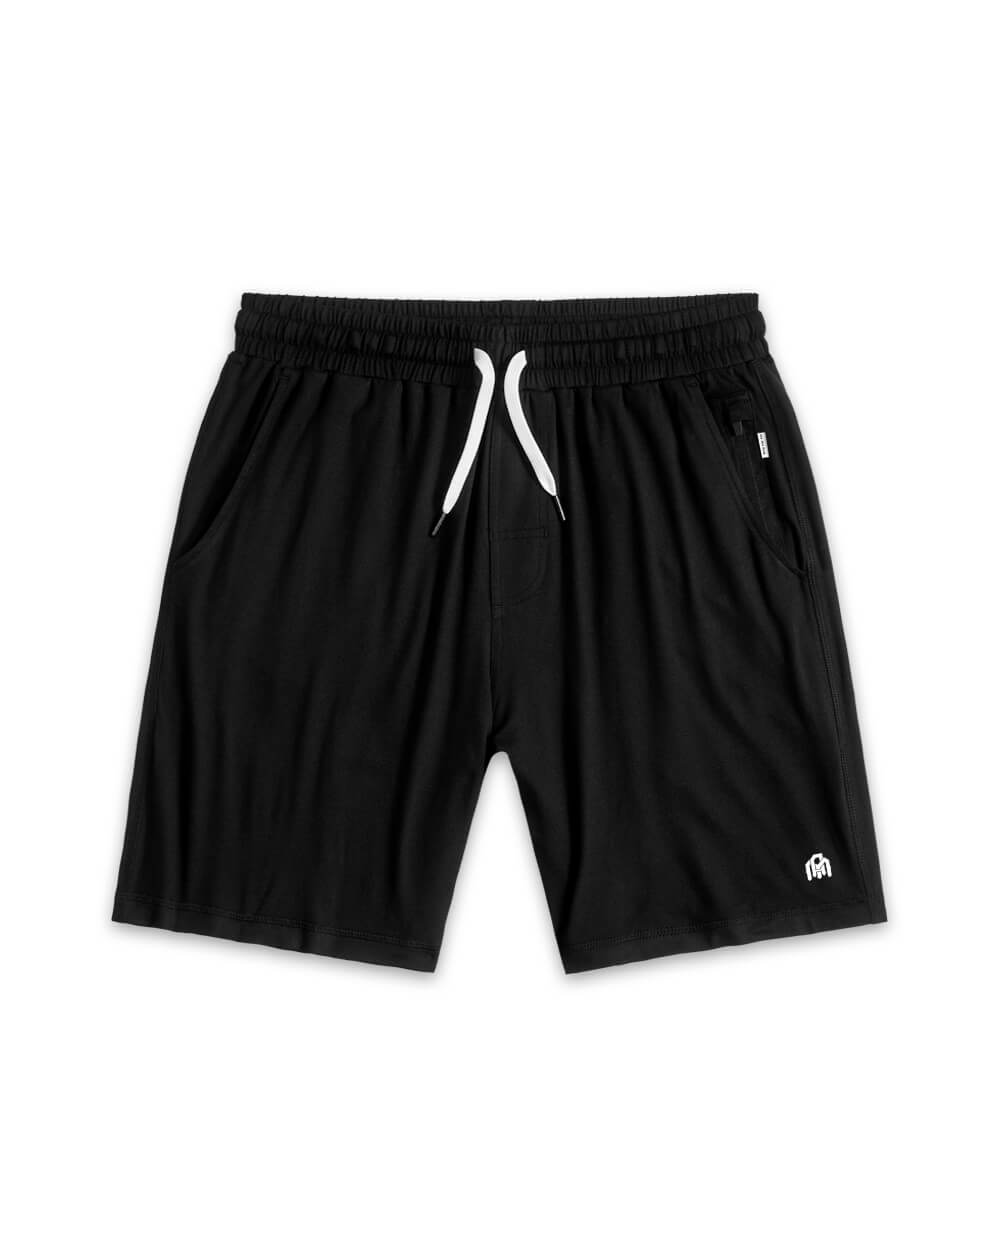 Basic Comfort Shorts-Black-Front